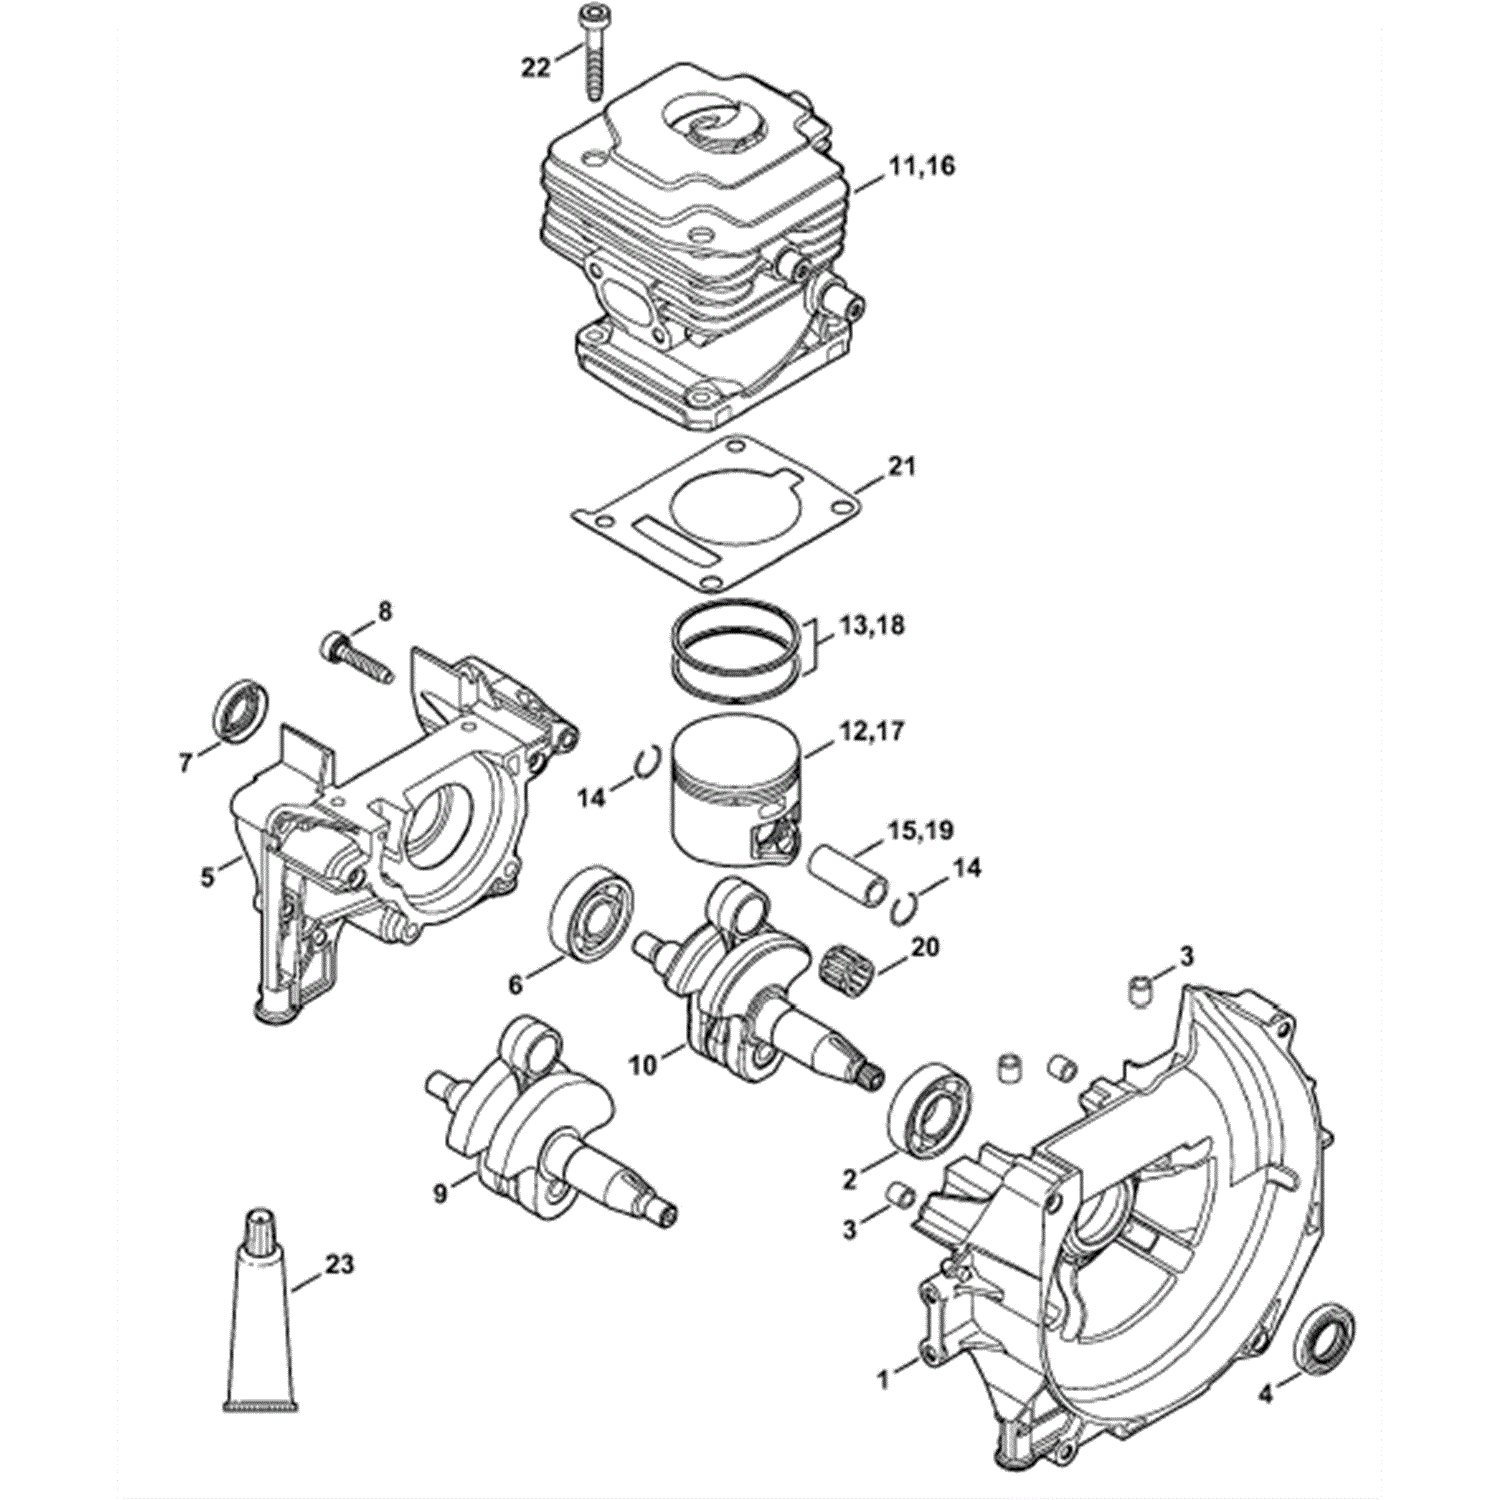 Stihl FS 240 Brushcutter (FS240RCE) Parts Diagram, Crankcase